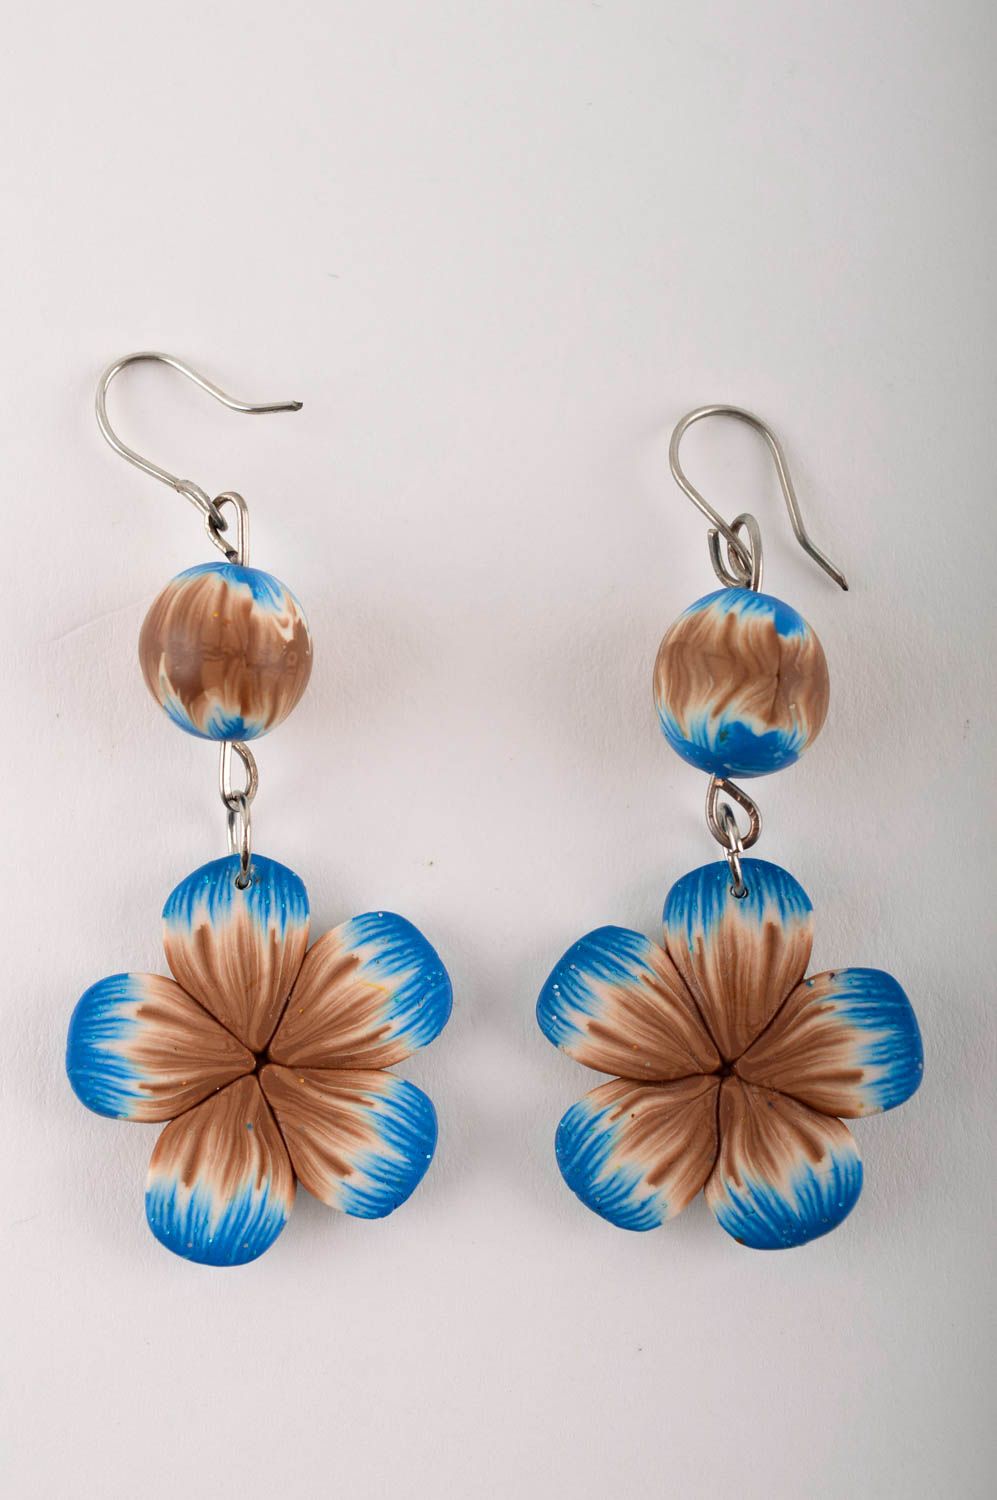 Unusual handmade plastic earrings artisan jewelry designs flower earrings photo 5